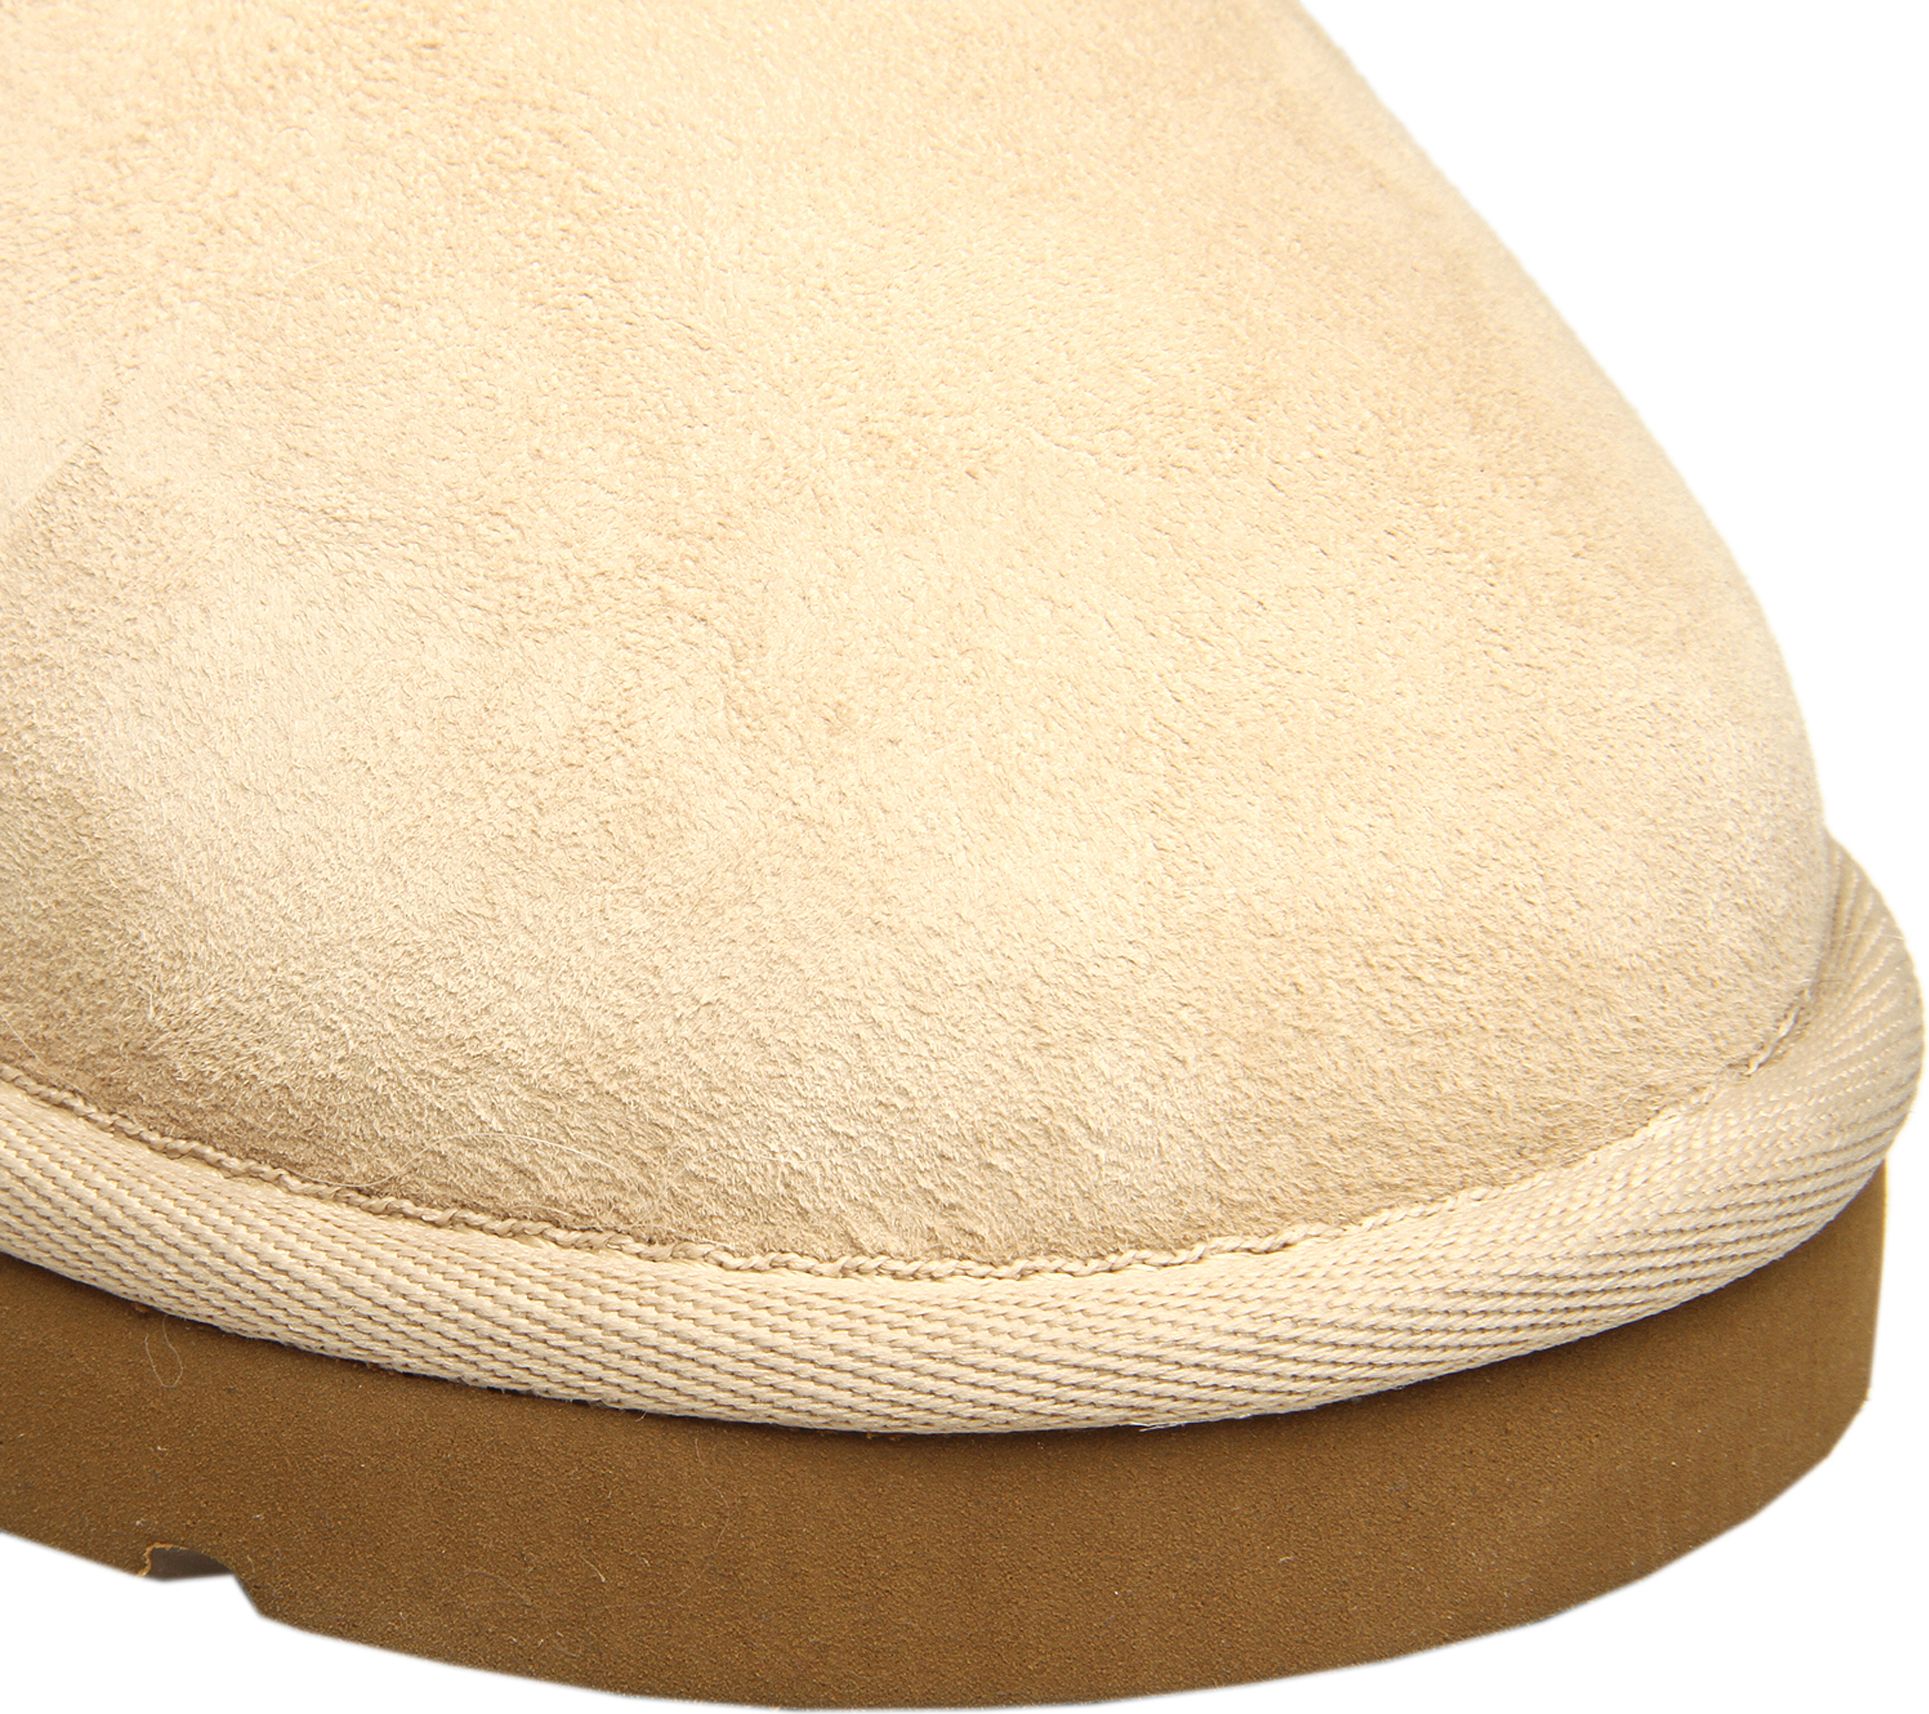 Ugg Fur Cuff Sheepskin Boots in Brown (tan) | Lyst